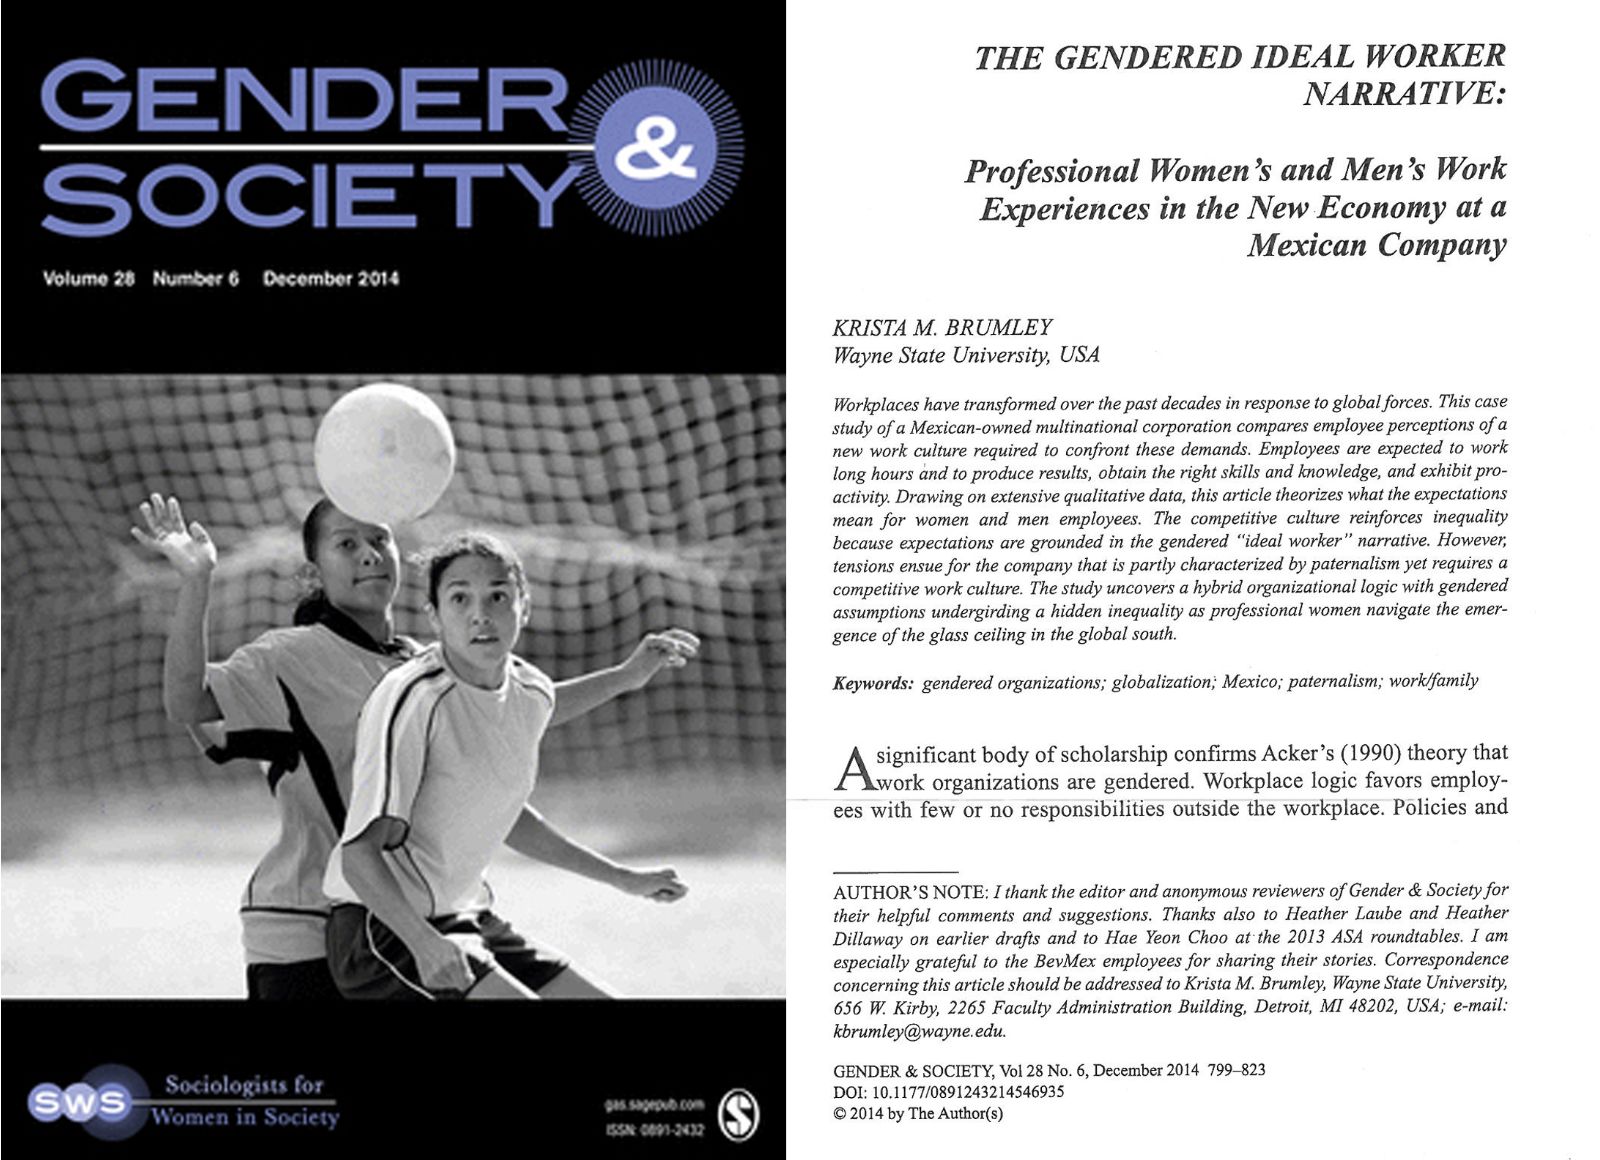 Journal of Gender & Society